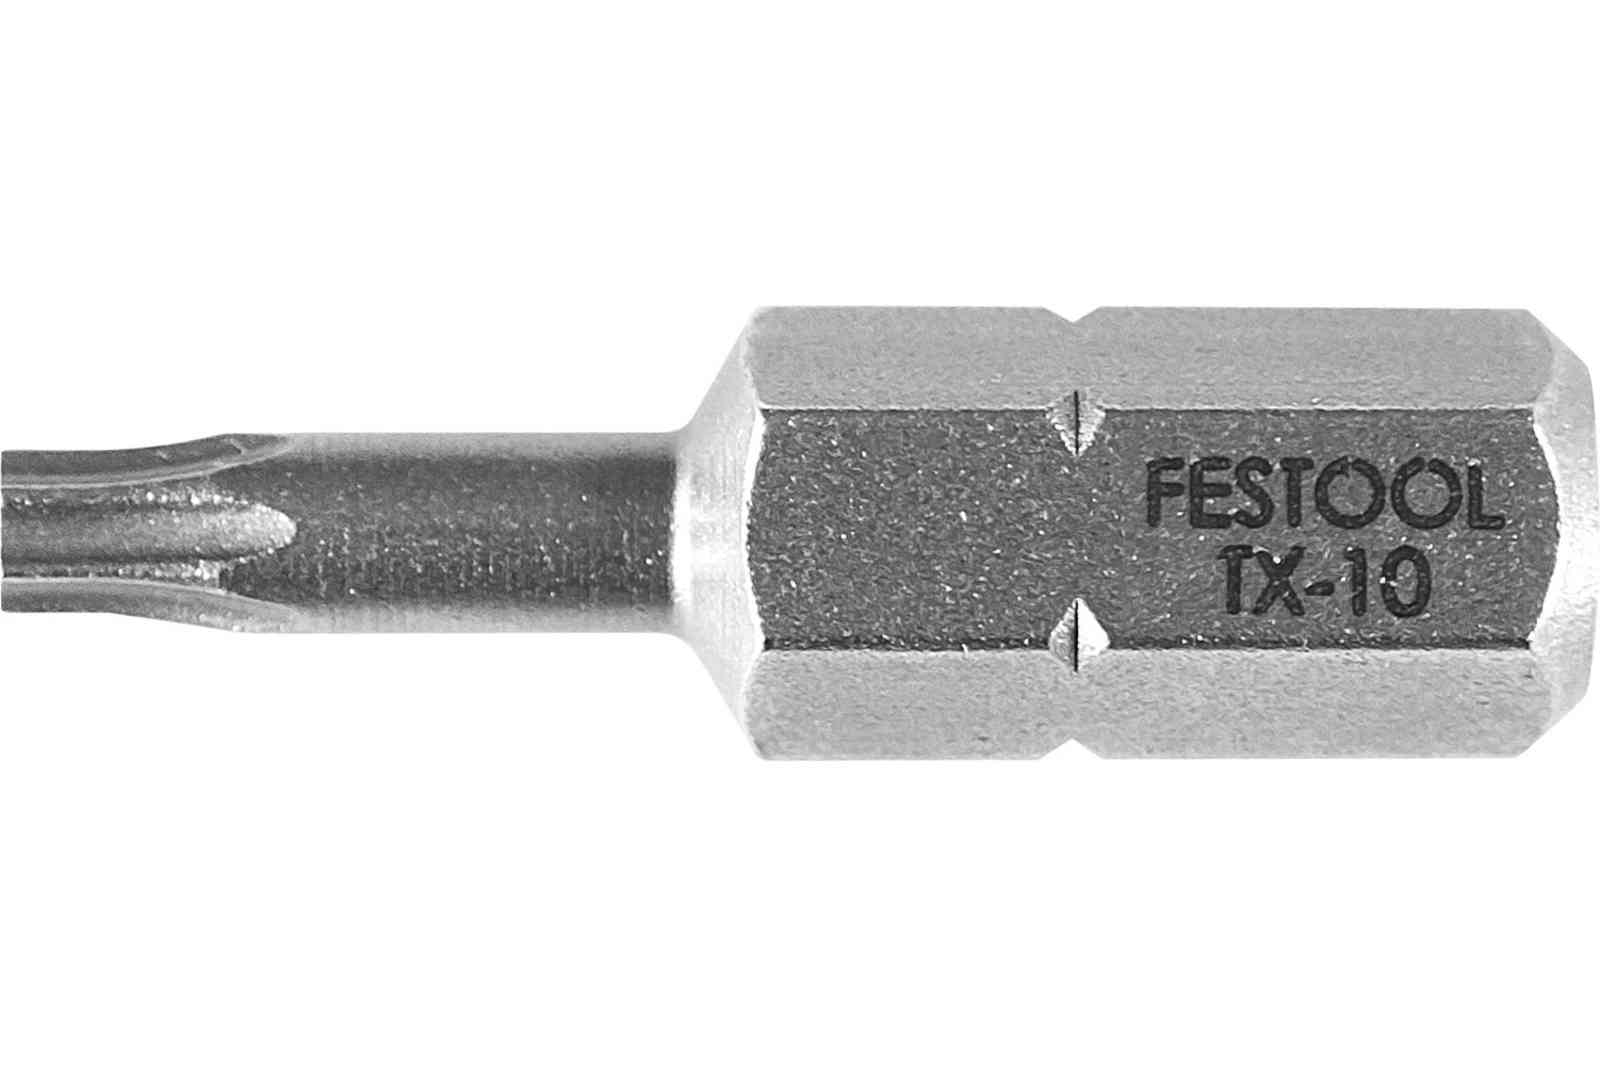 FESTOOL -  Inserto TX torx attacco esagonale 1/4 - misura/forma 25 X TX30 - note 10 PEZZI TX30